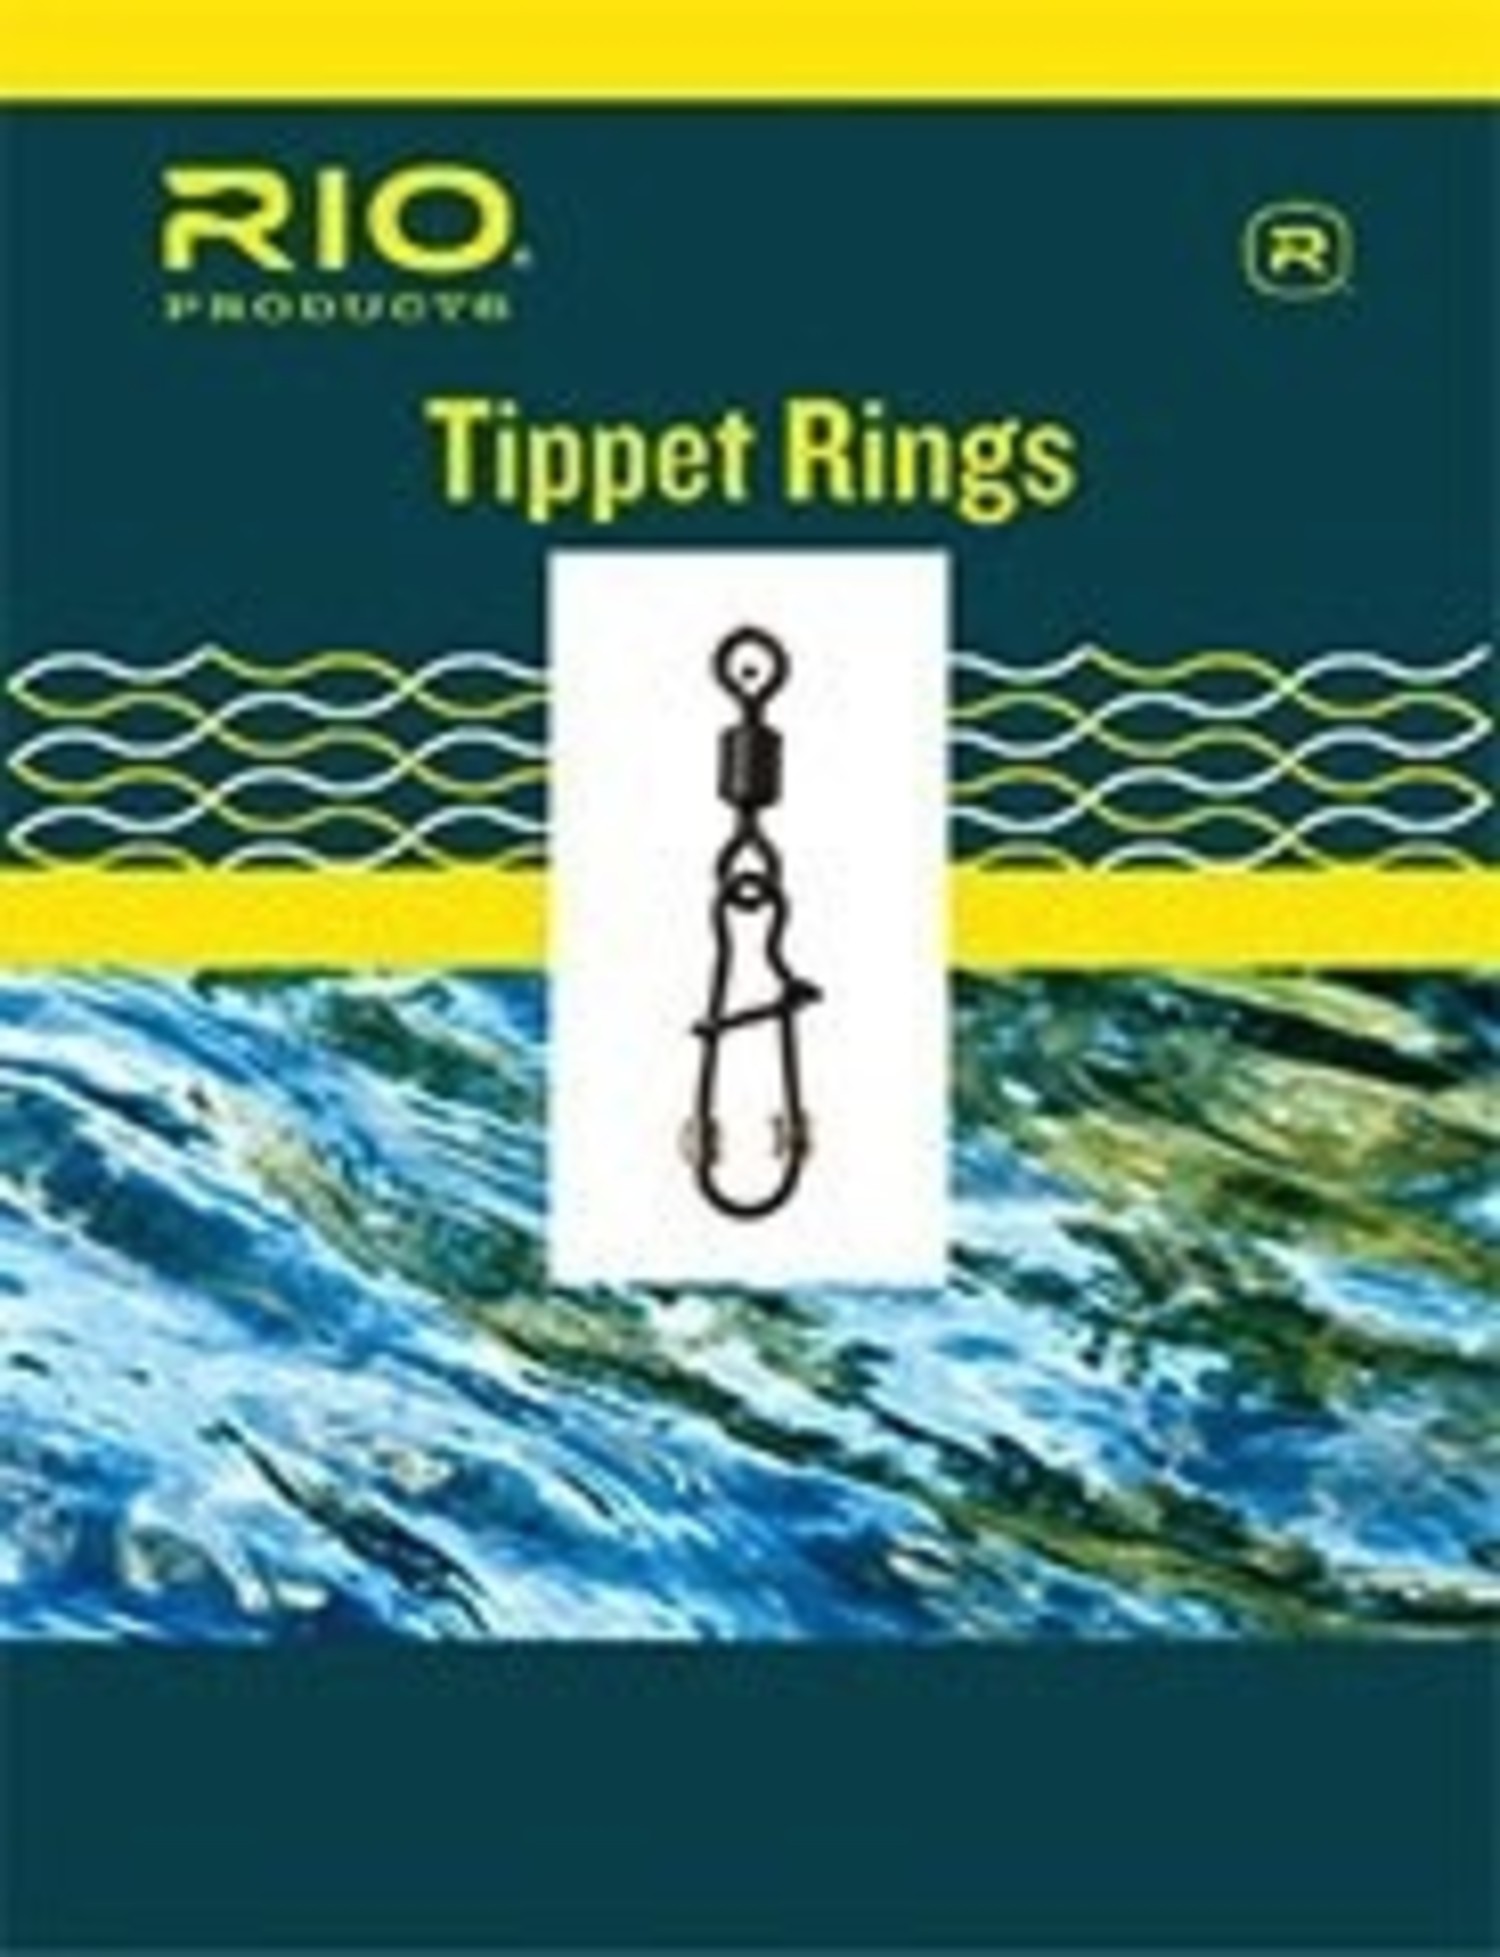 https://cdn.shoplightspeed.com/shops/618341/files/10329446/1500x4000x3/rio-rio-tippet-rings.jpg